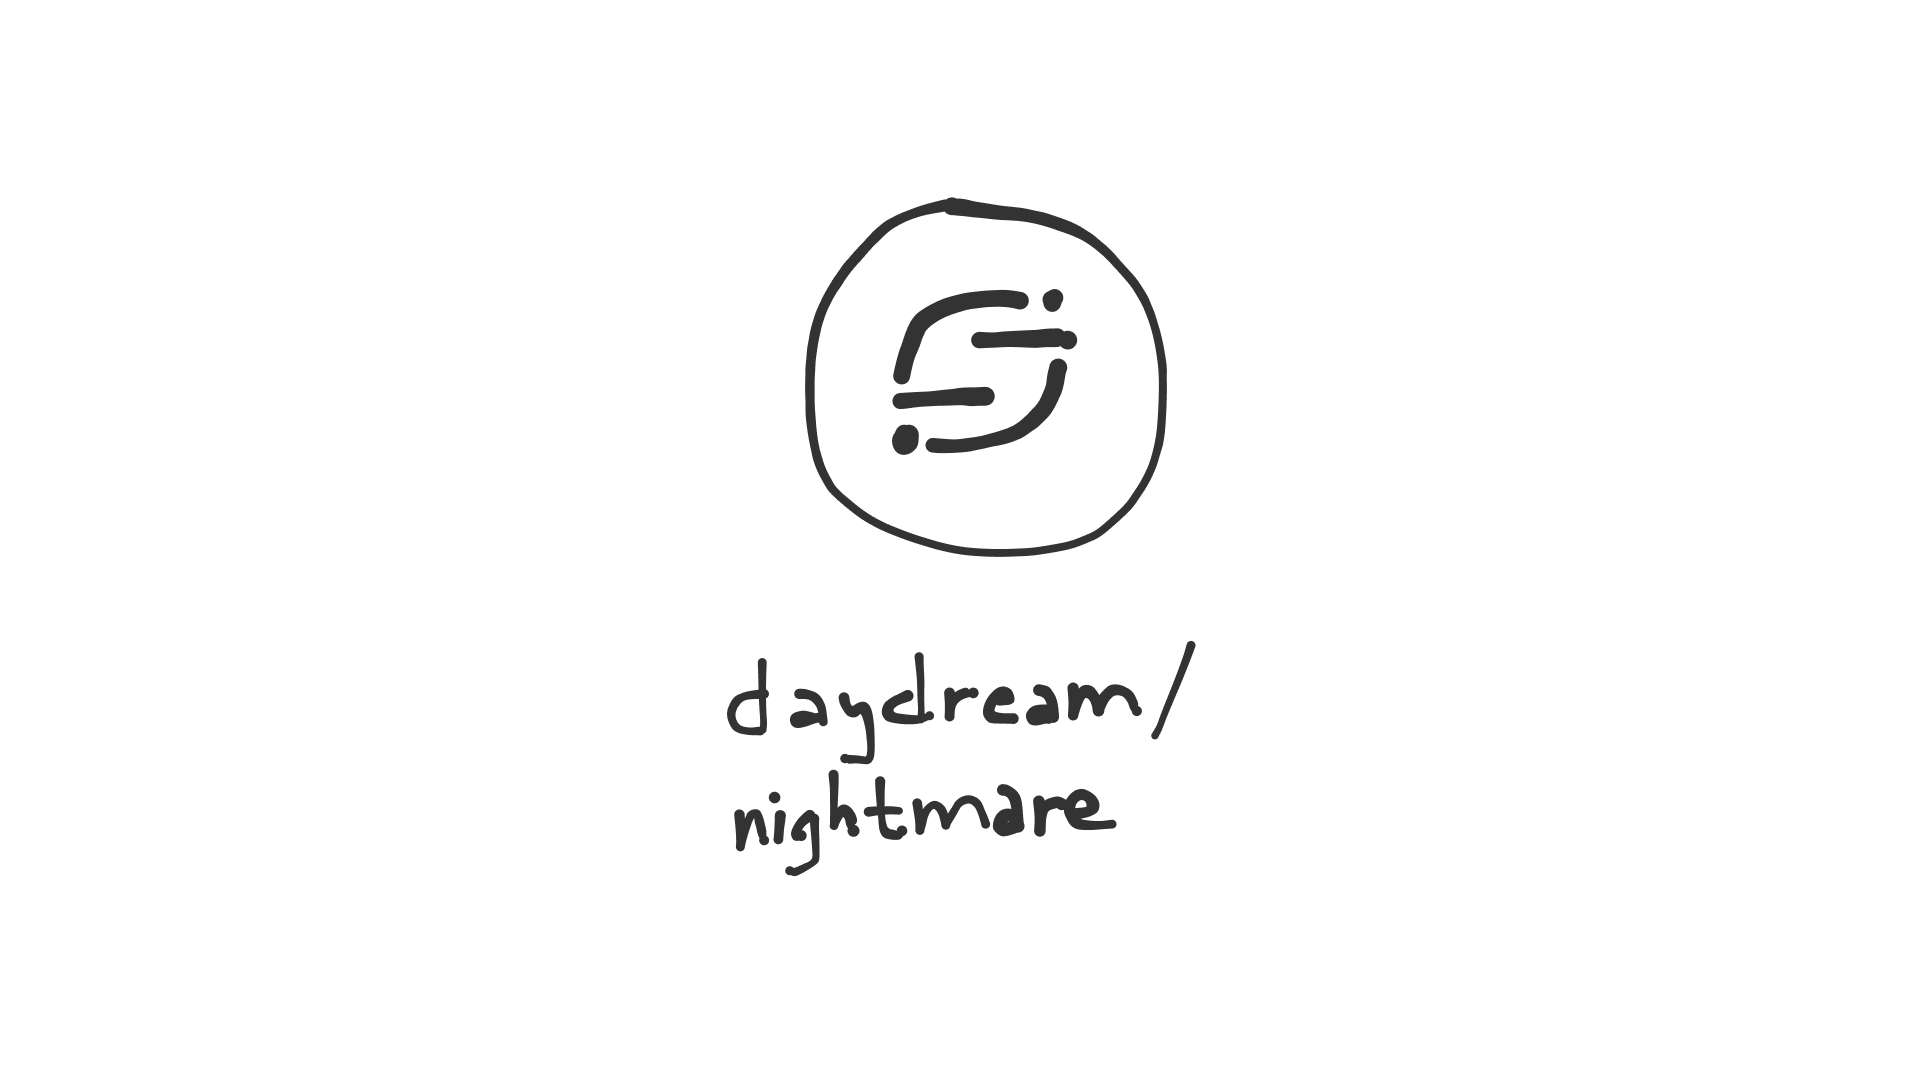 Segment.io-logo with text daydream/nightmare below.